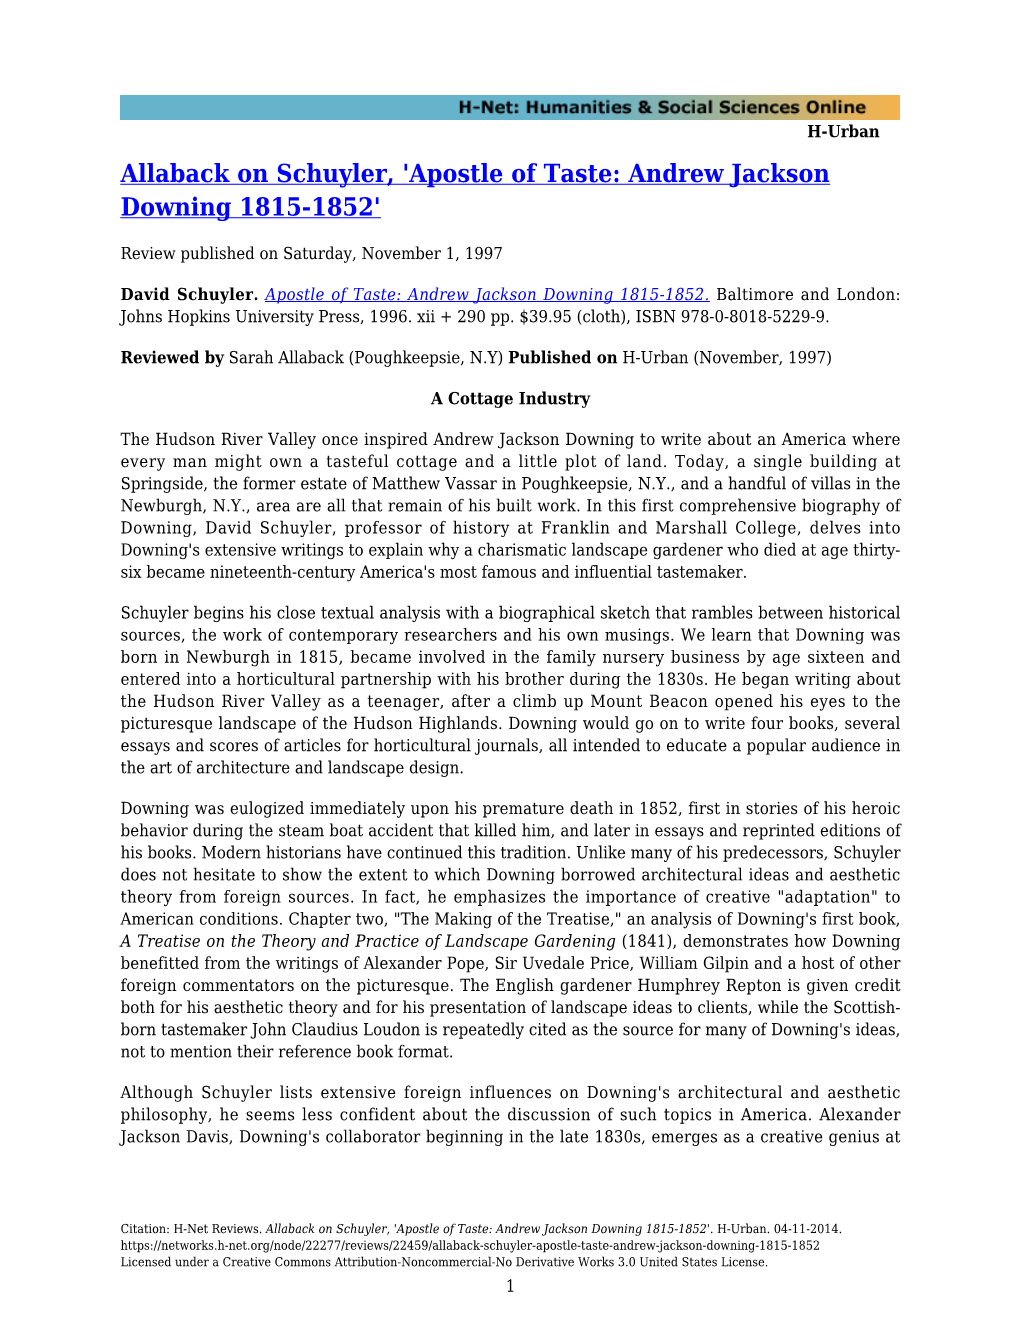 Allaback on Schuyler, 'Apostle of Taste: Andrew Jackson Downing 1815-1852'